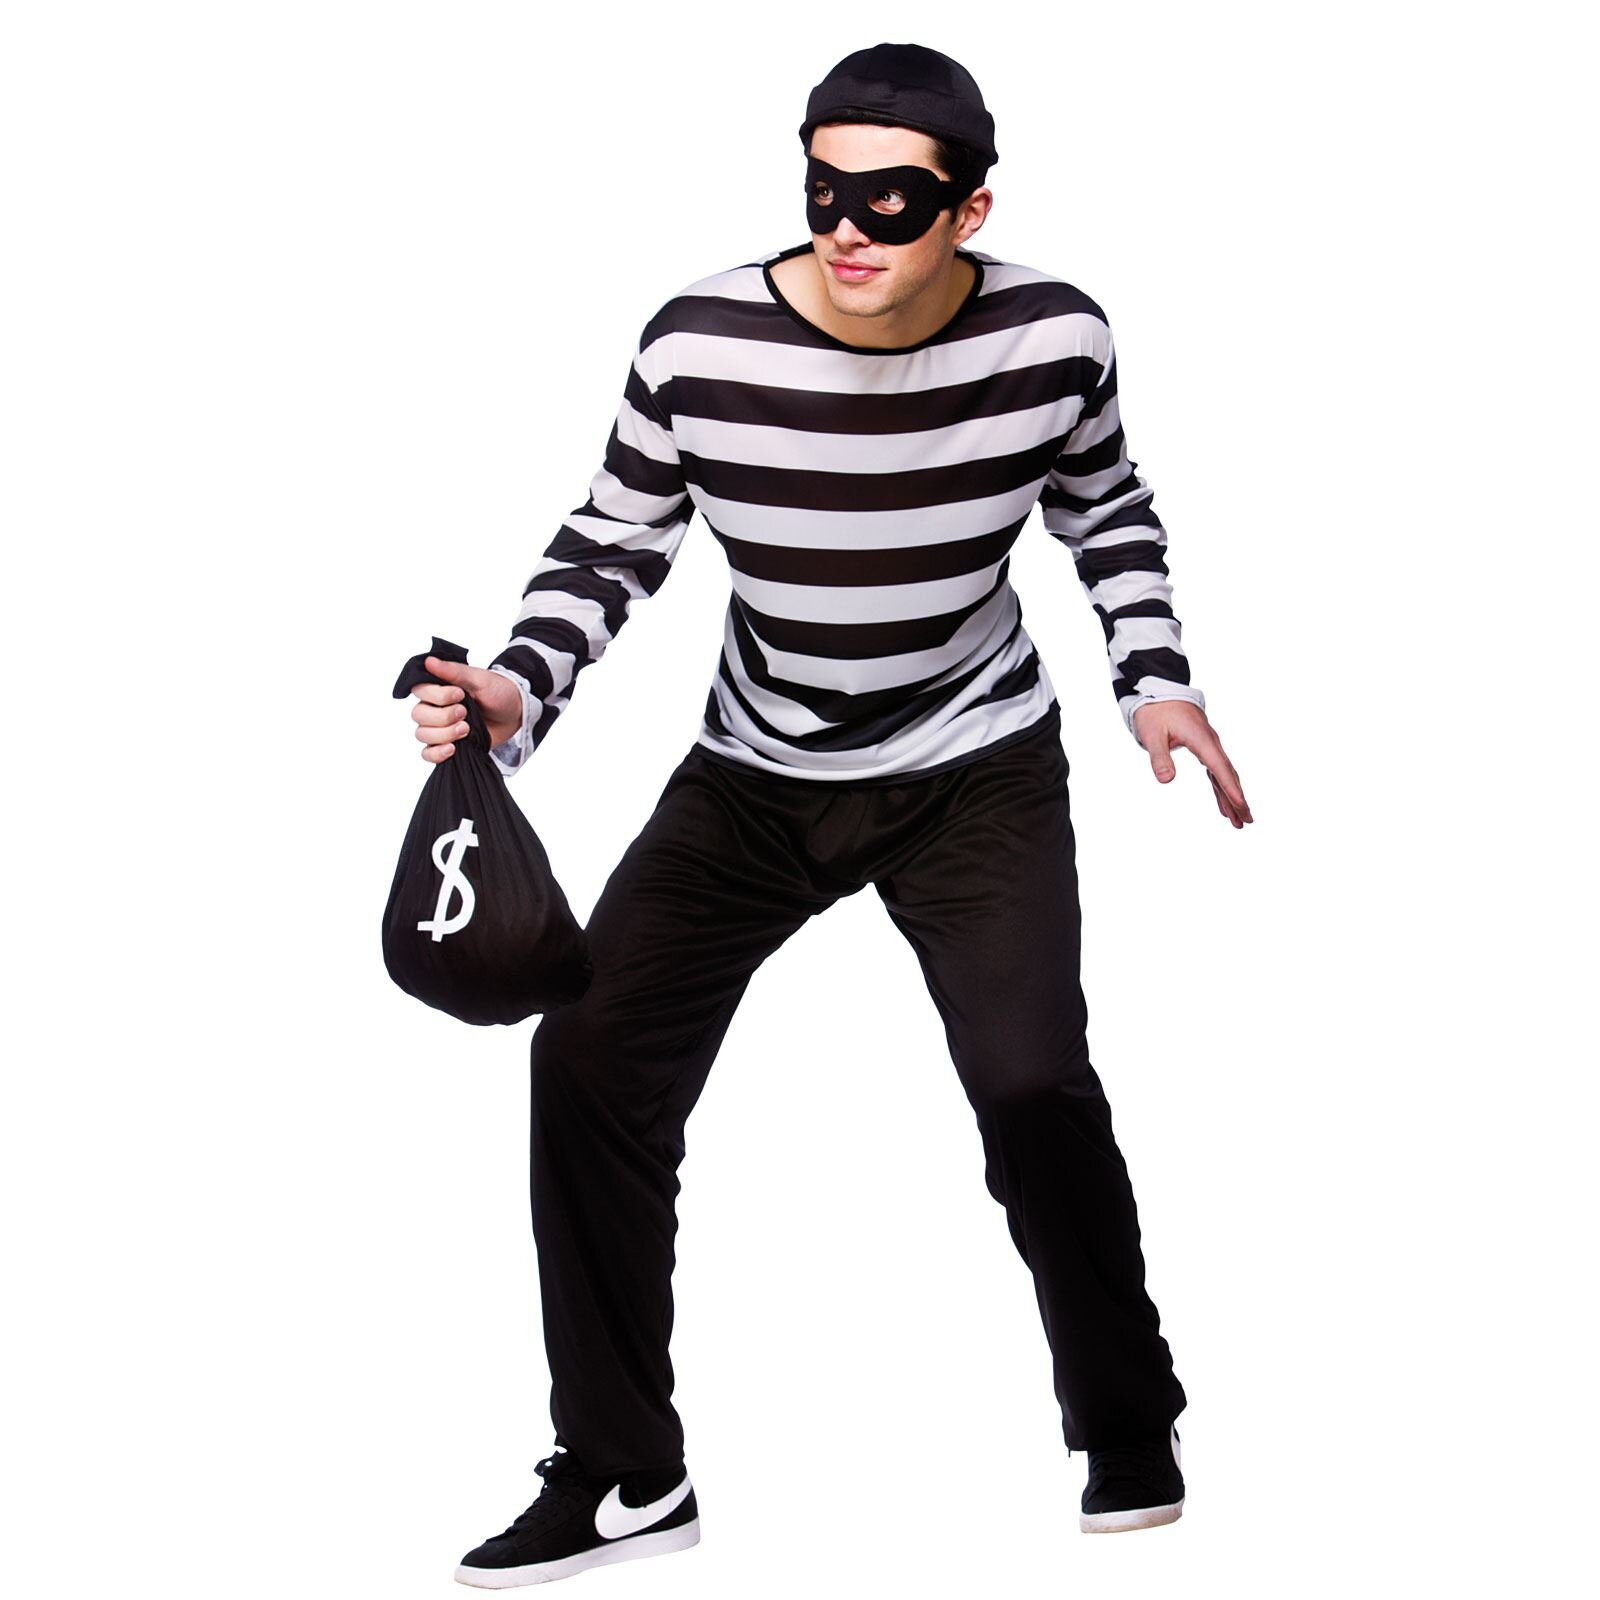 Comedy Fancy Dress Mens Burglar Convict Bank Thief Robber halloween Costume - L